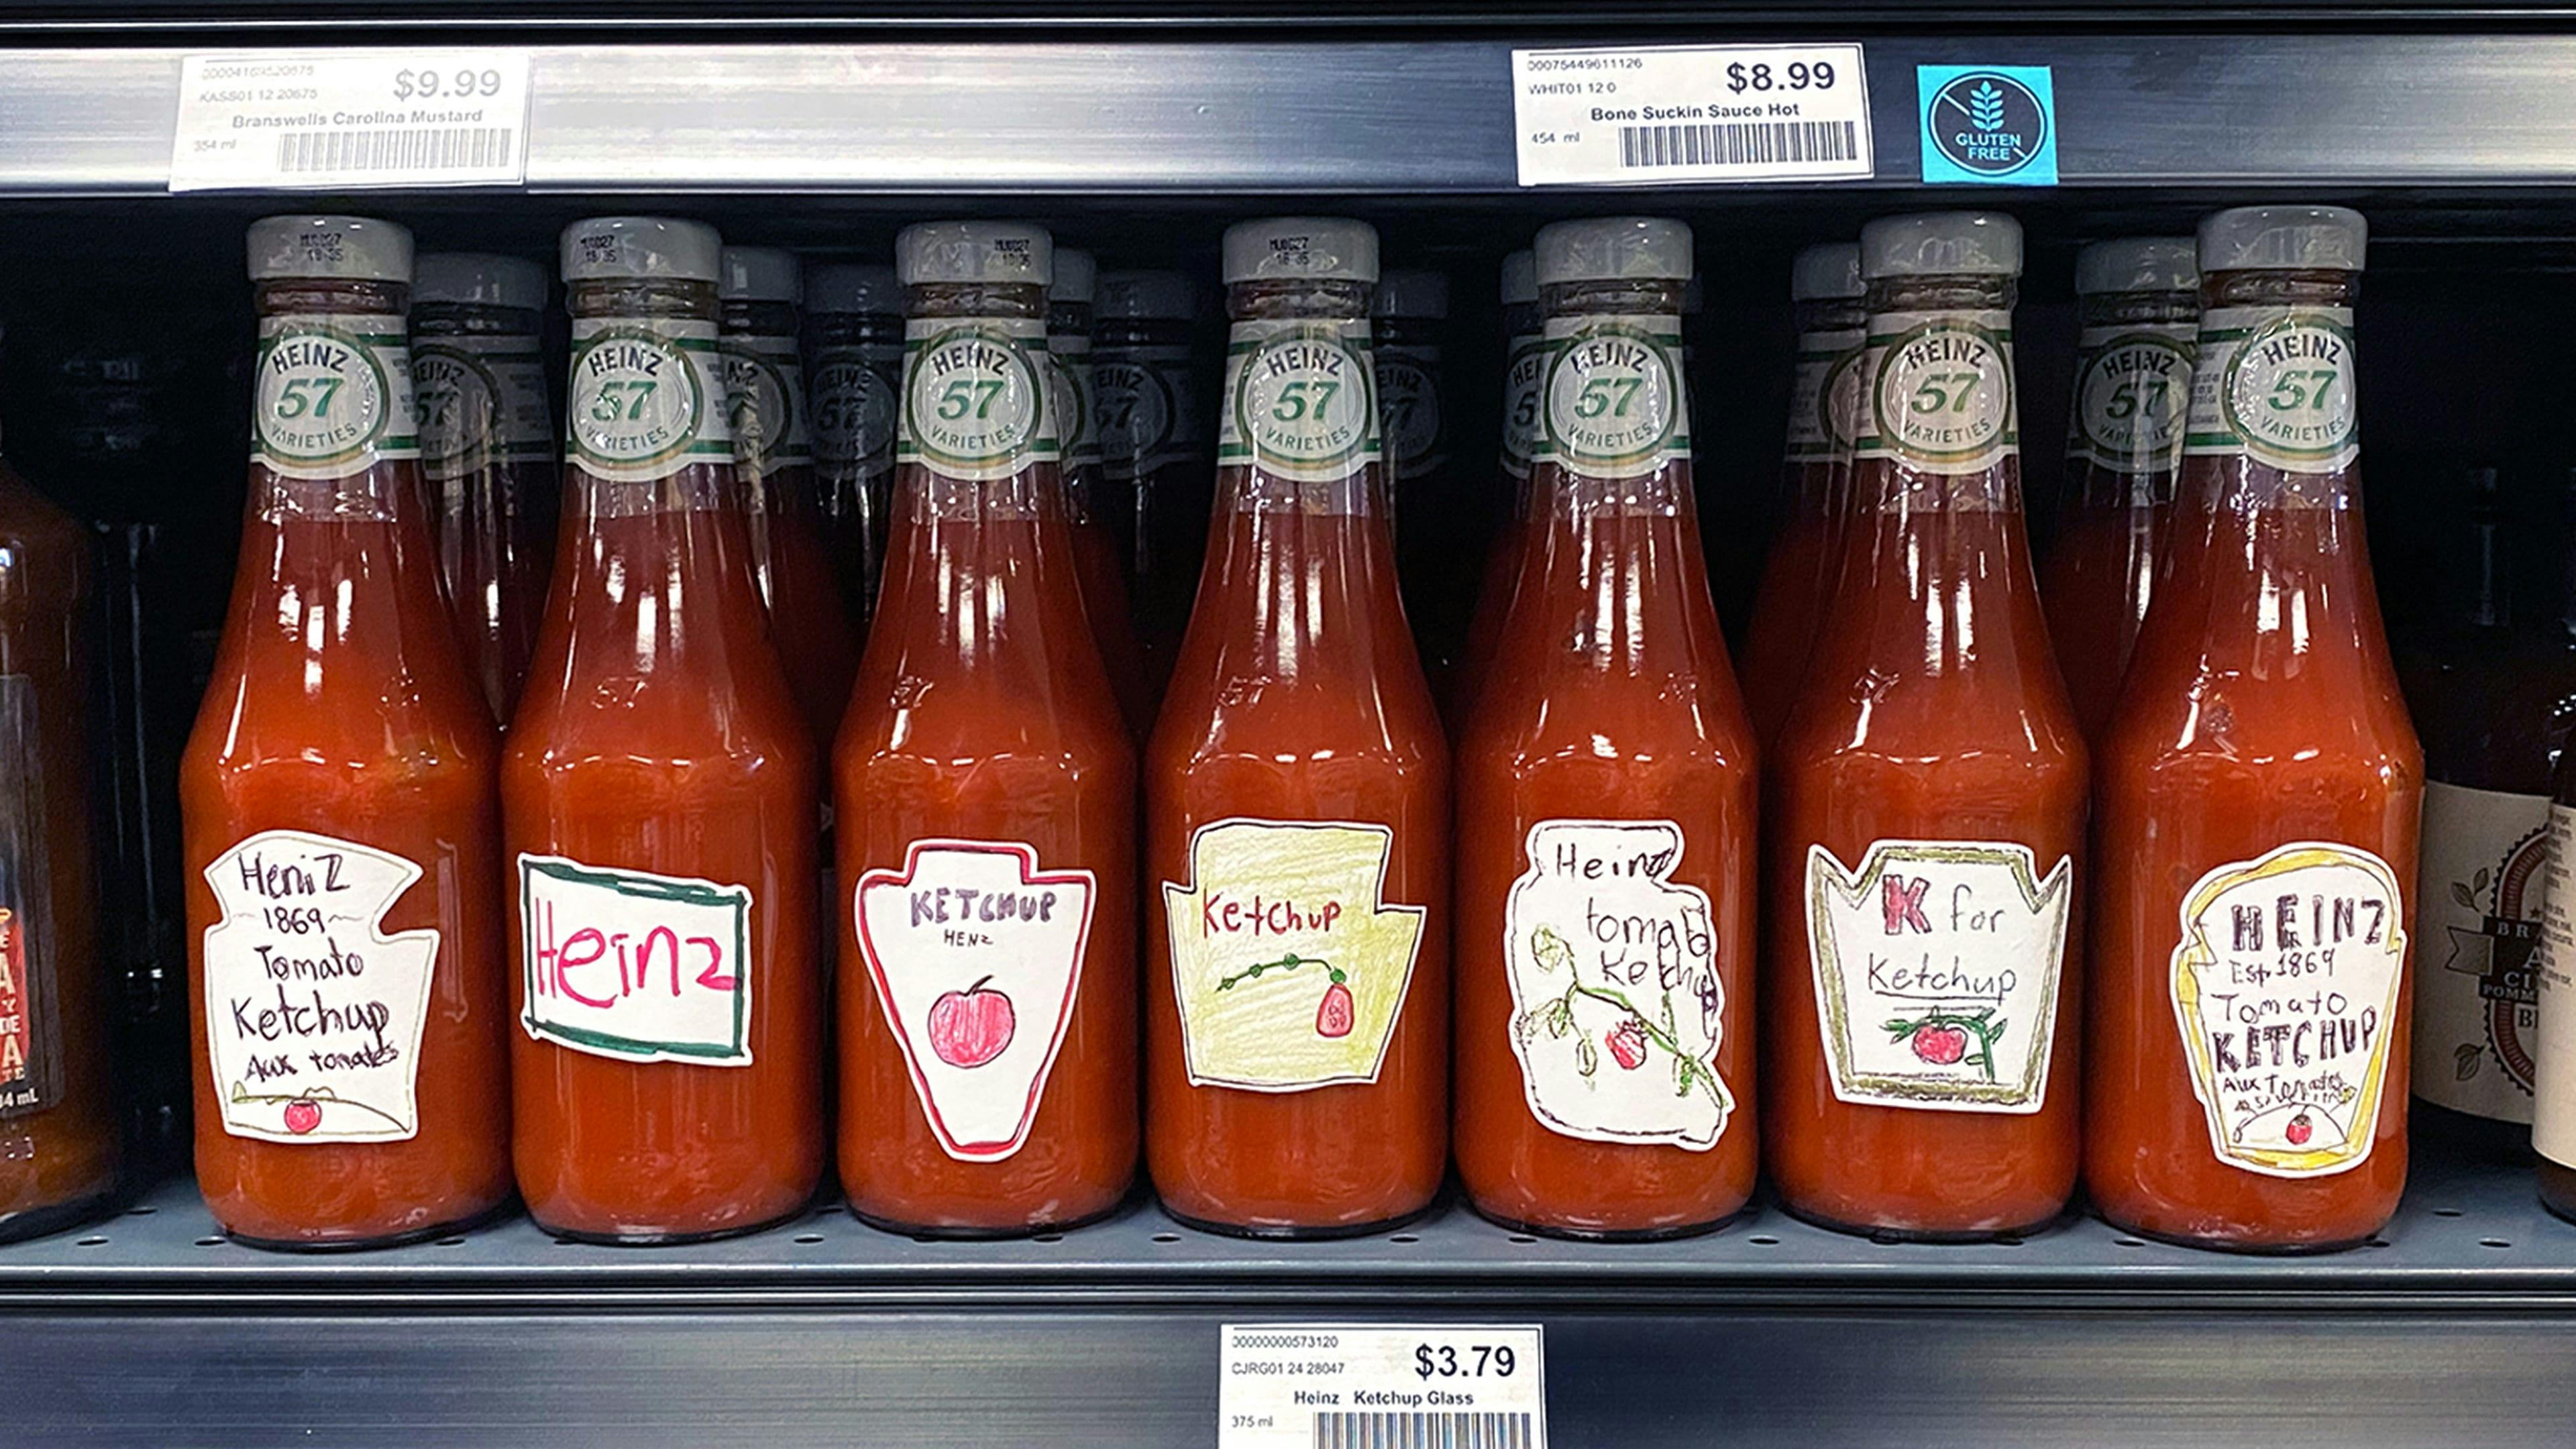 Heinz bottles on the shelf with hand drawn logos.